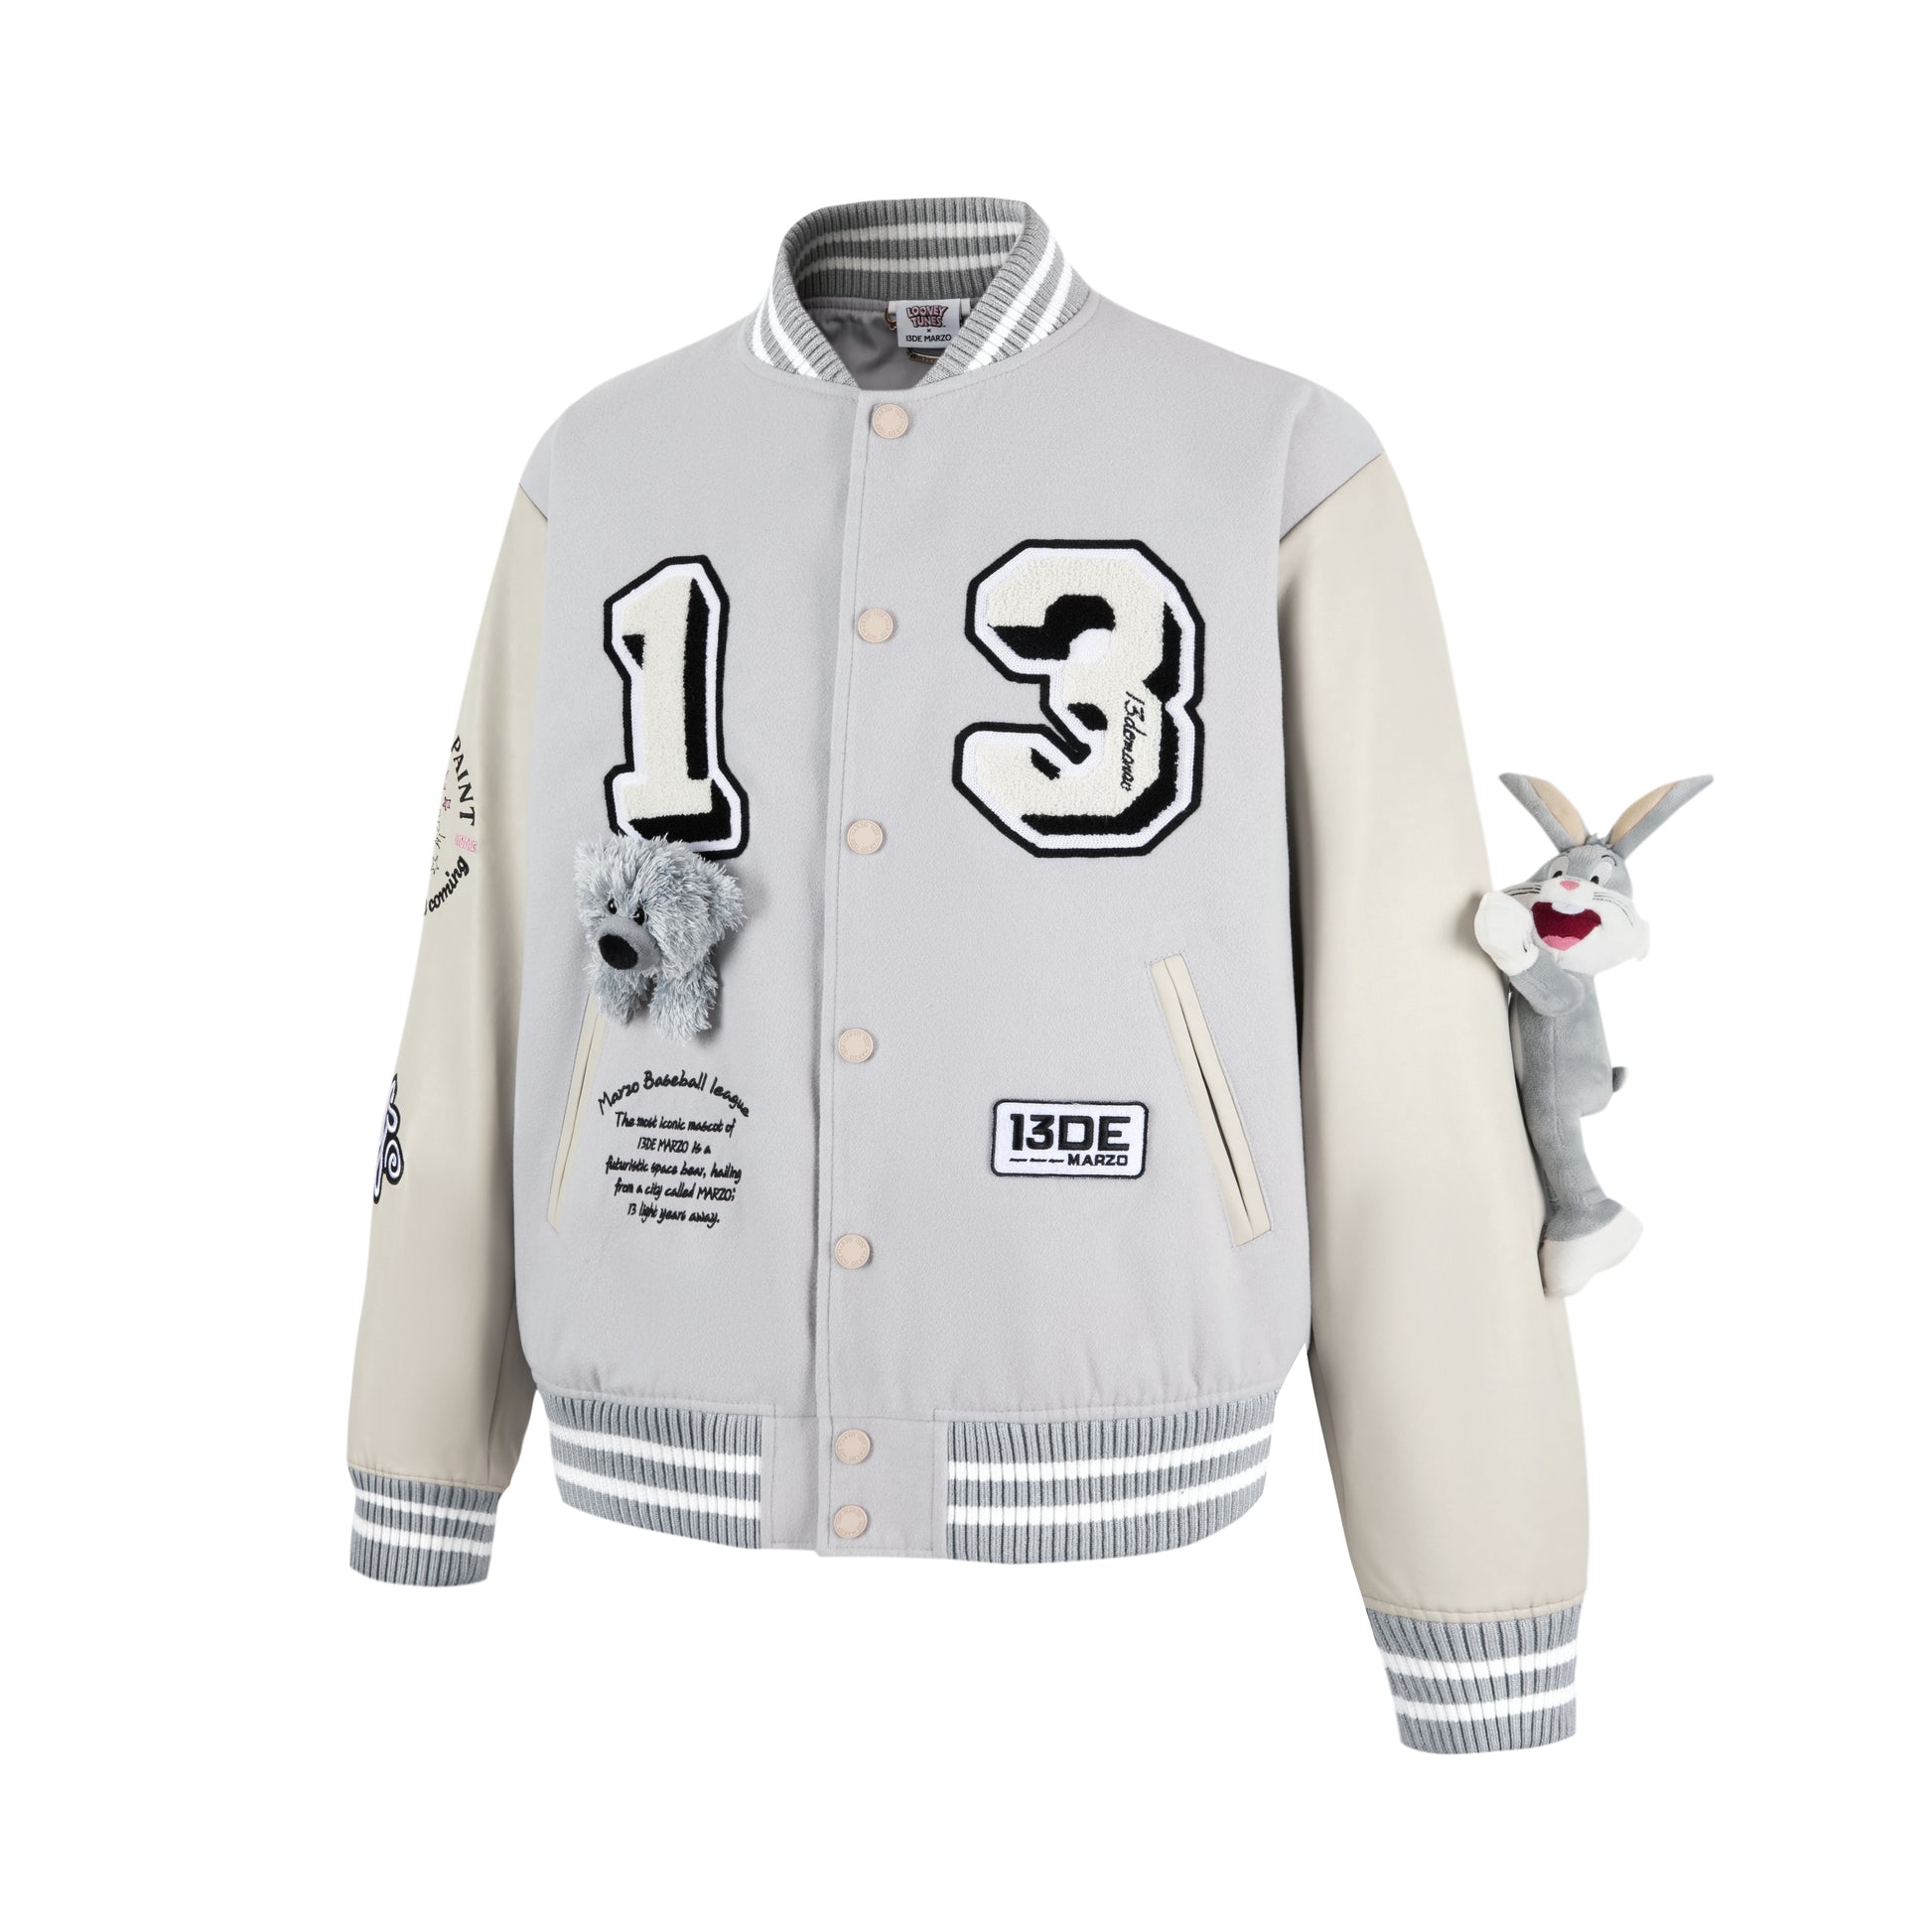 13DE MARZO x LOONEY TUNES Bugs Bunny Baseball Jacket Vapor Gray